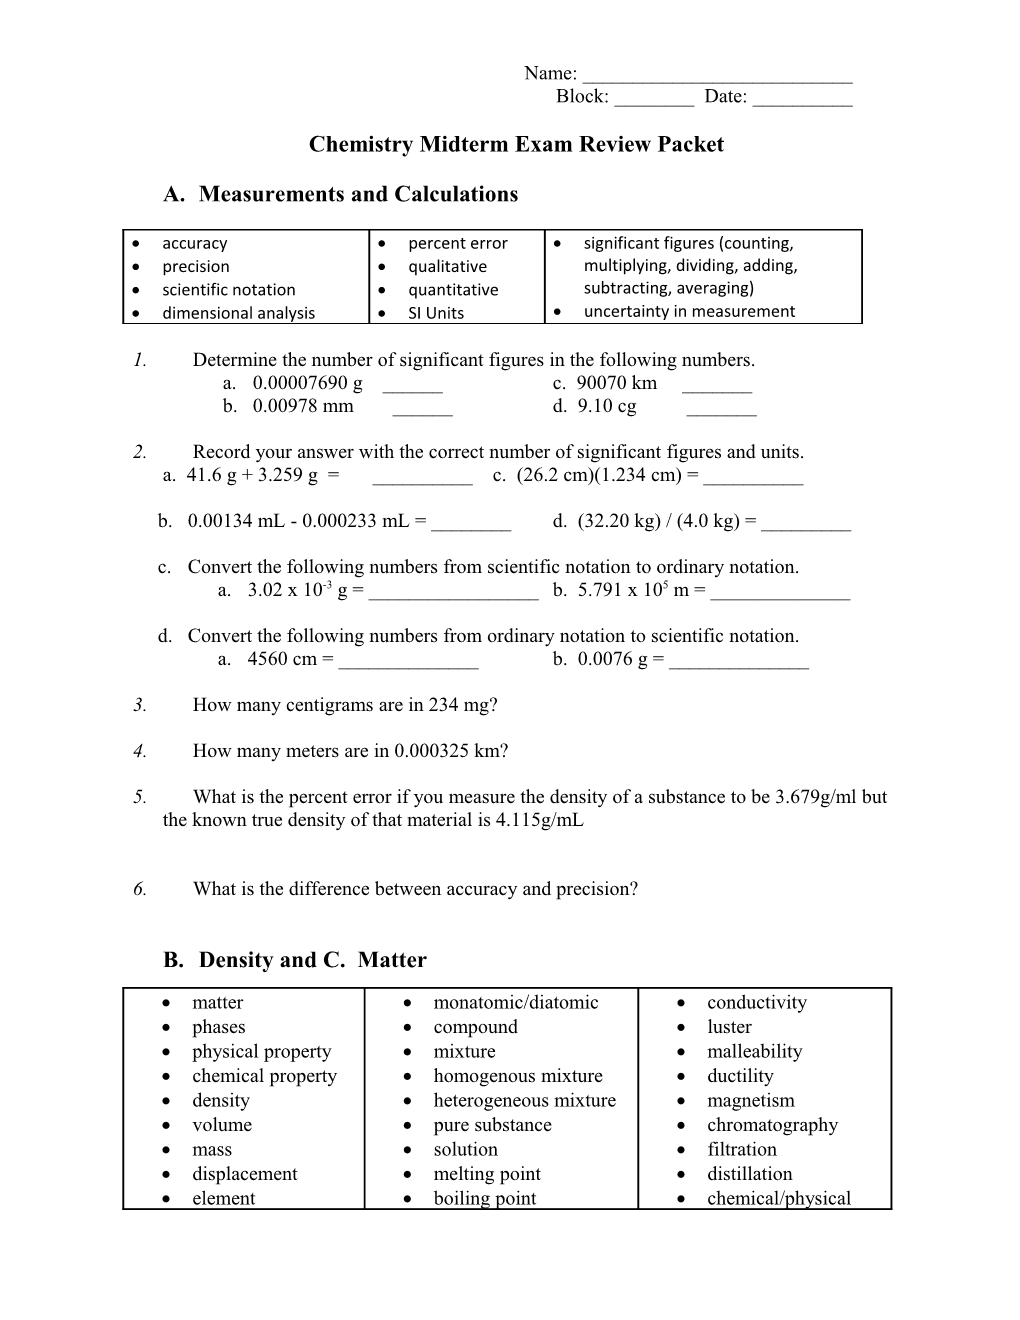 Chemistry Midterm Exam Review s1